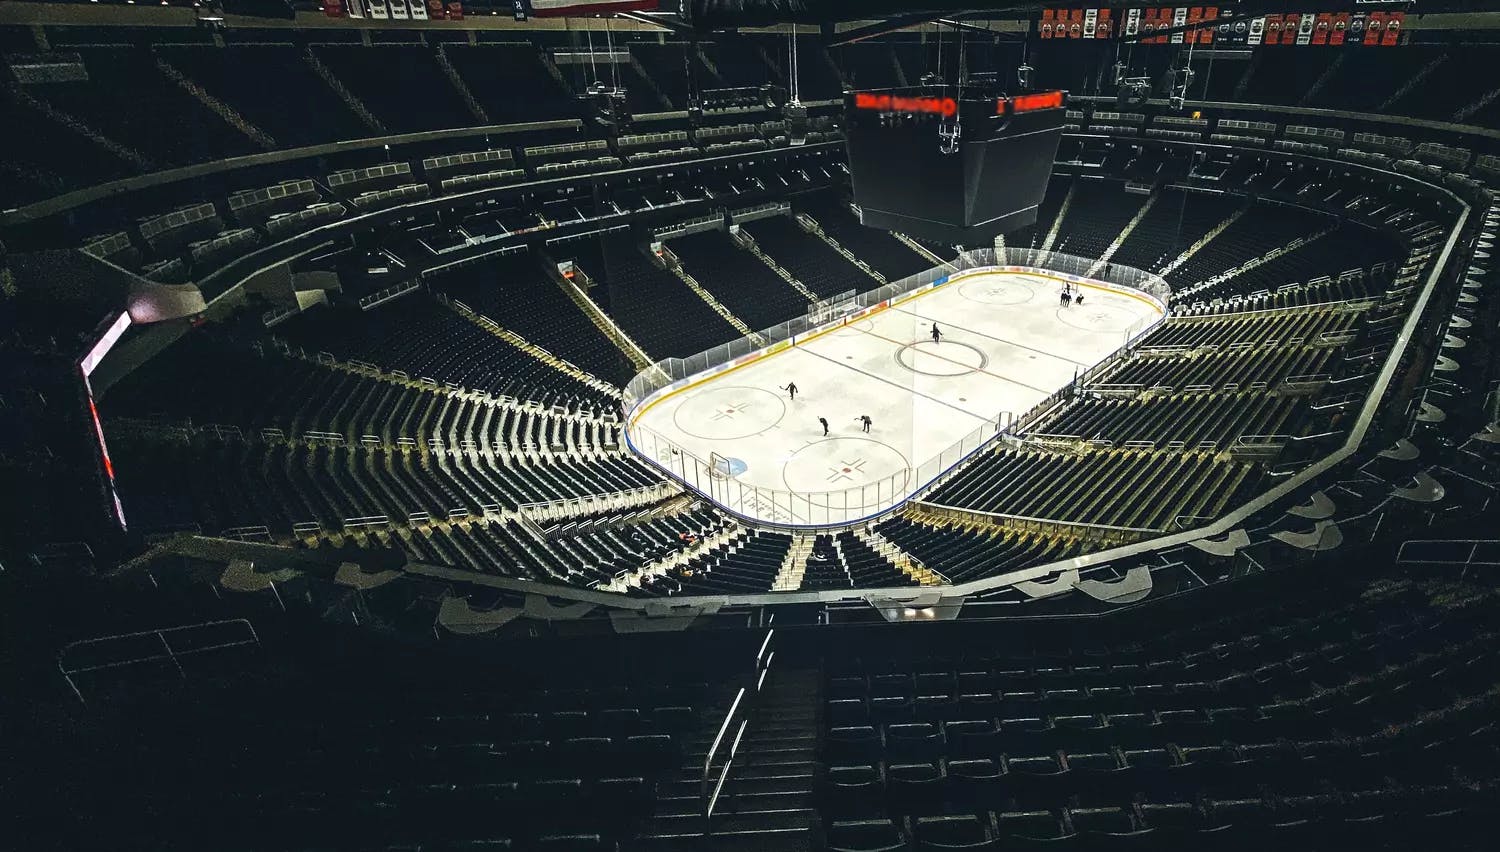 Rogers Arena and Premium Seats